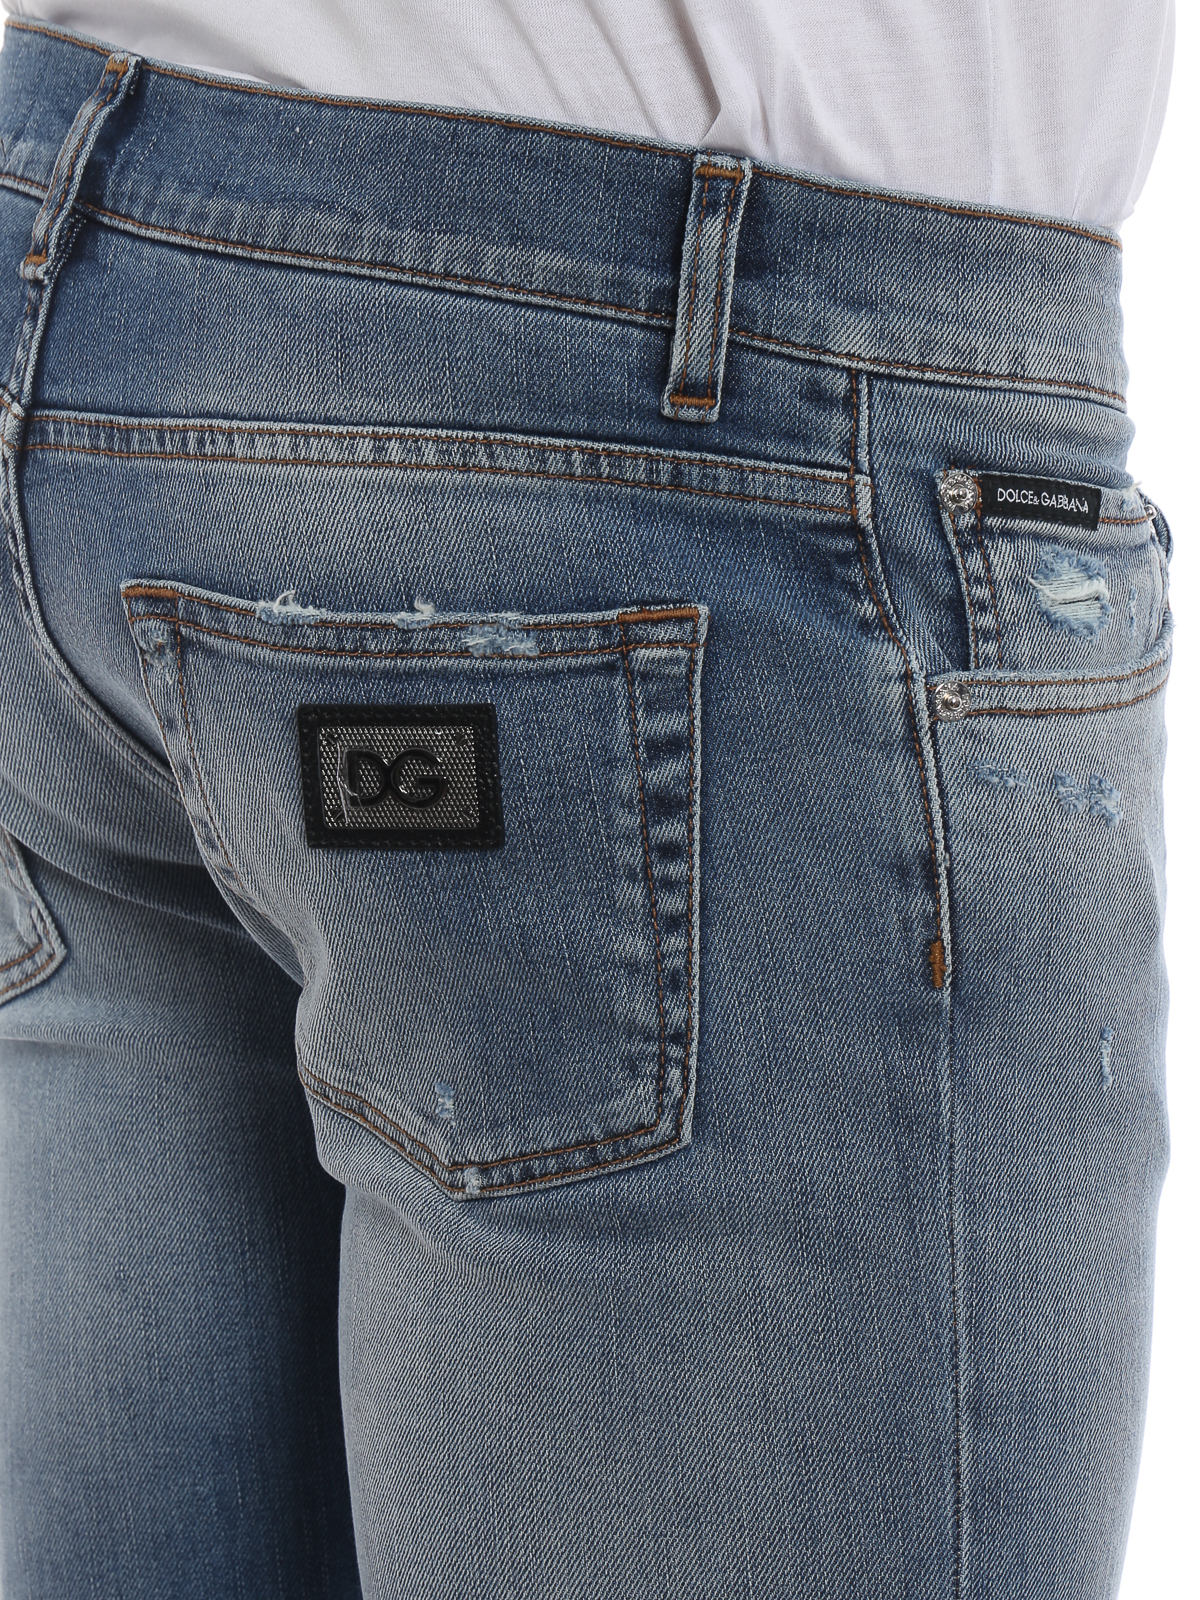 Skinny jeans Dolce & Gabbana - Distressed denim stone washed jeans ...